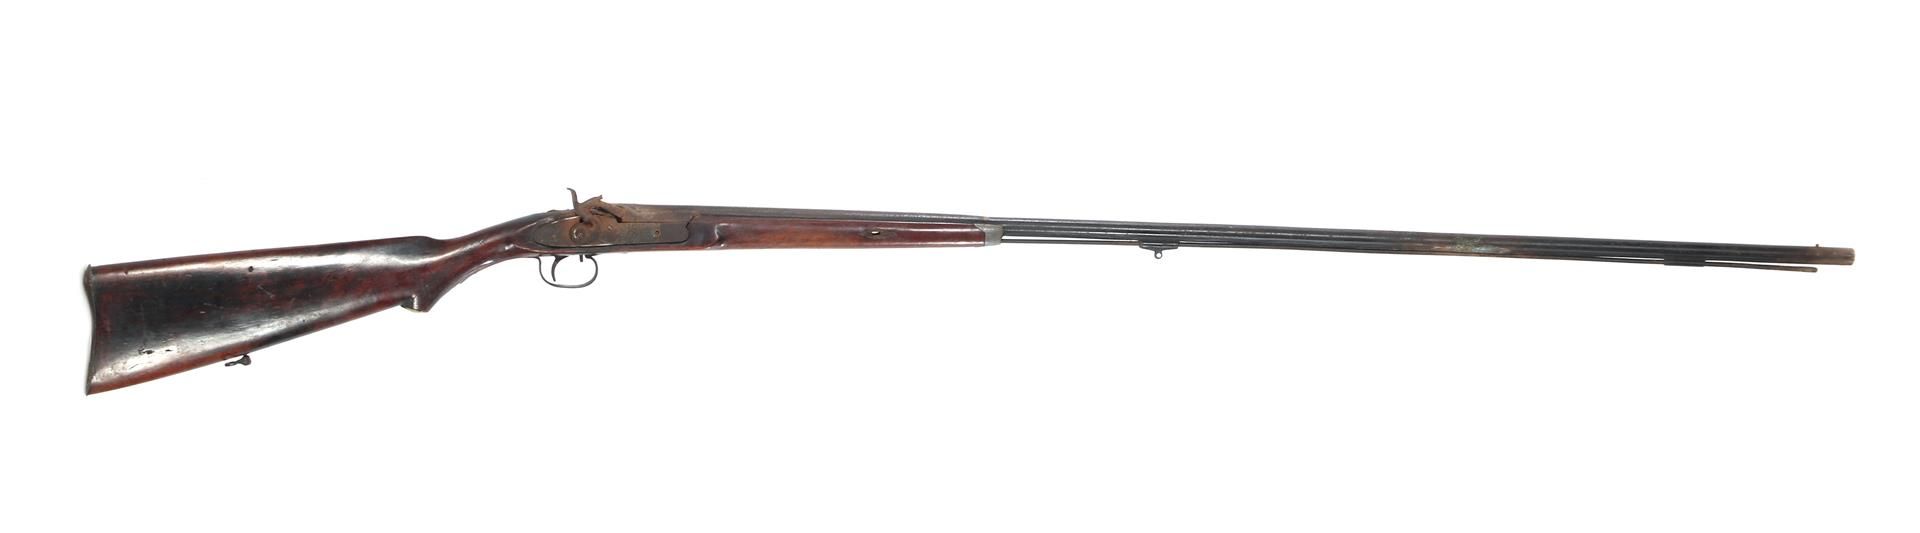 Antique rifle